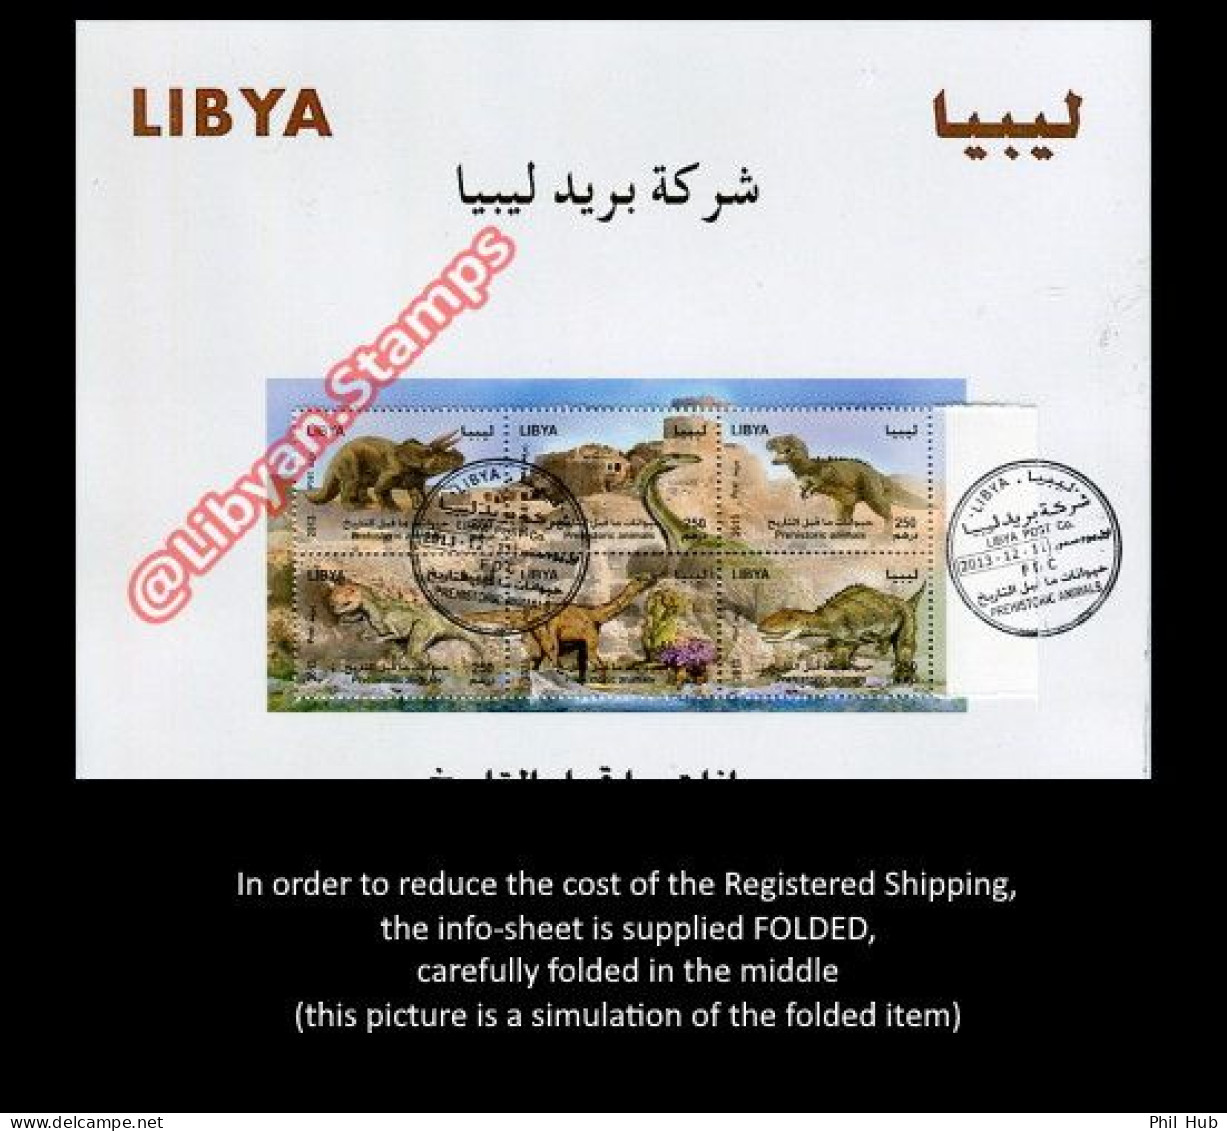 LIBYA 2013 Dinosaurs (Libya Post INFO-SHEET With Stamps PMK) SUPPLIED FOLDED - Vor- U. Frühgeschichte